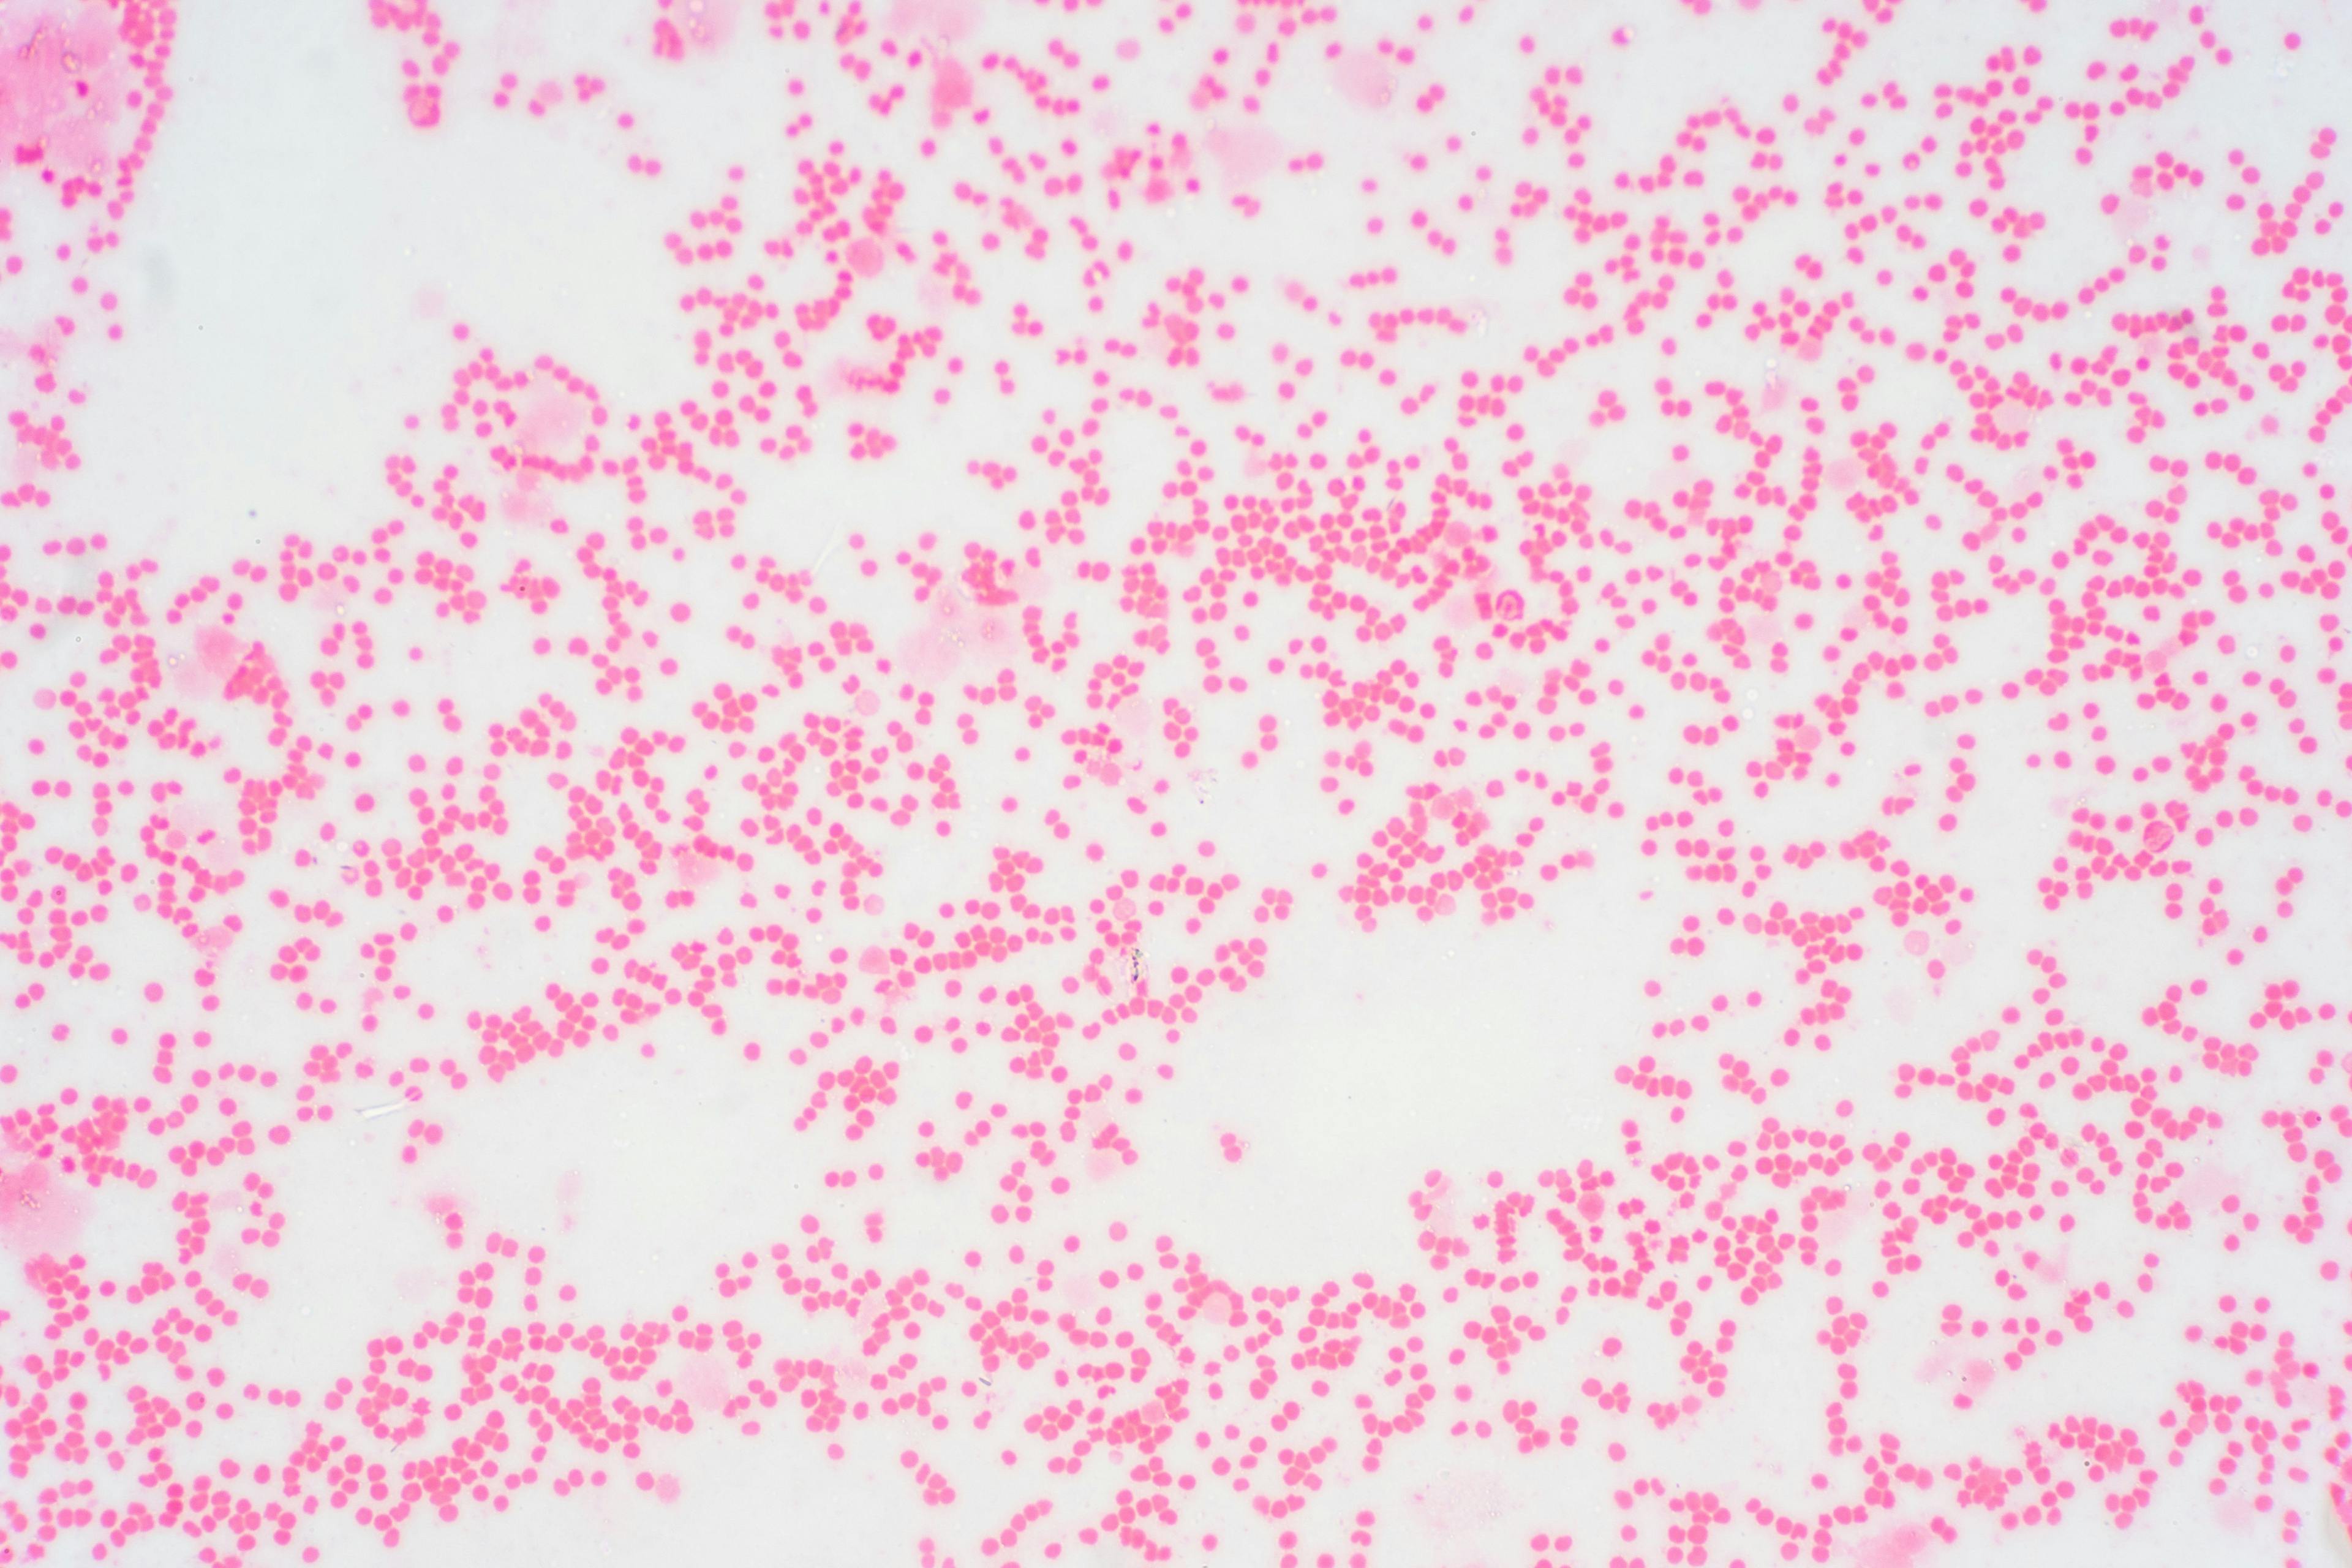 Bone marrow biopsy from myelodysplastic condition under the microscope view. | Image Credit: © tonaquatic -www.stock.adobe.com